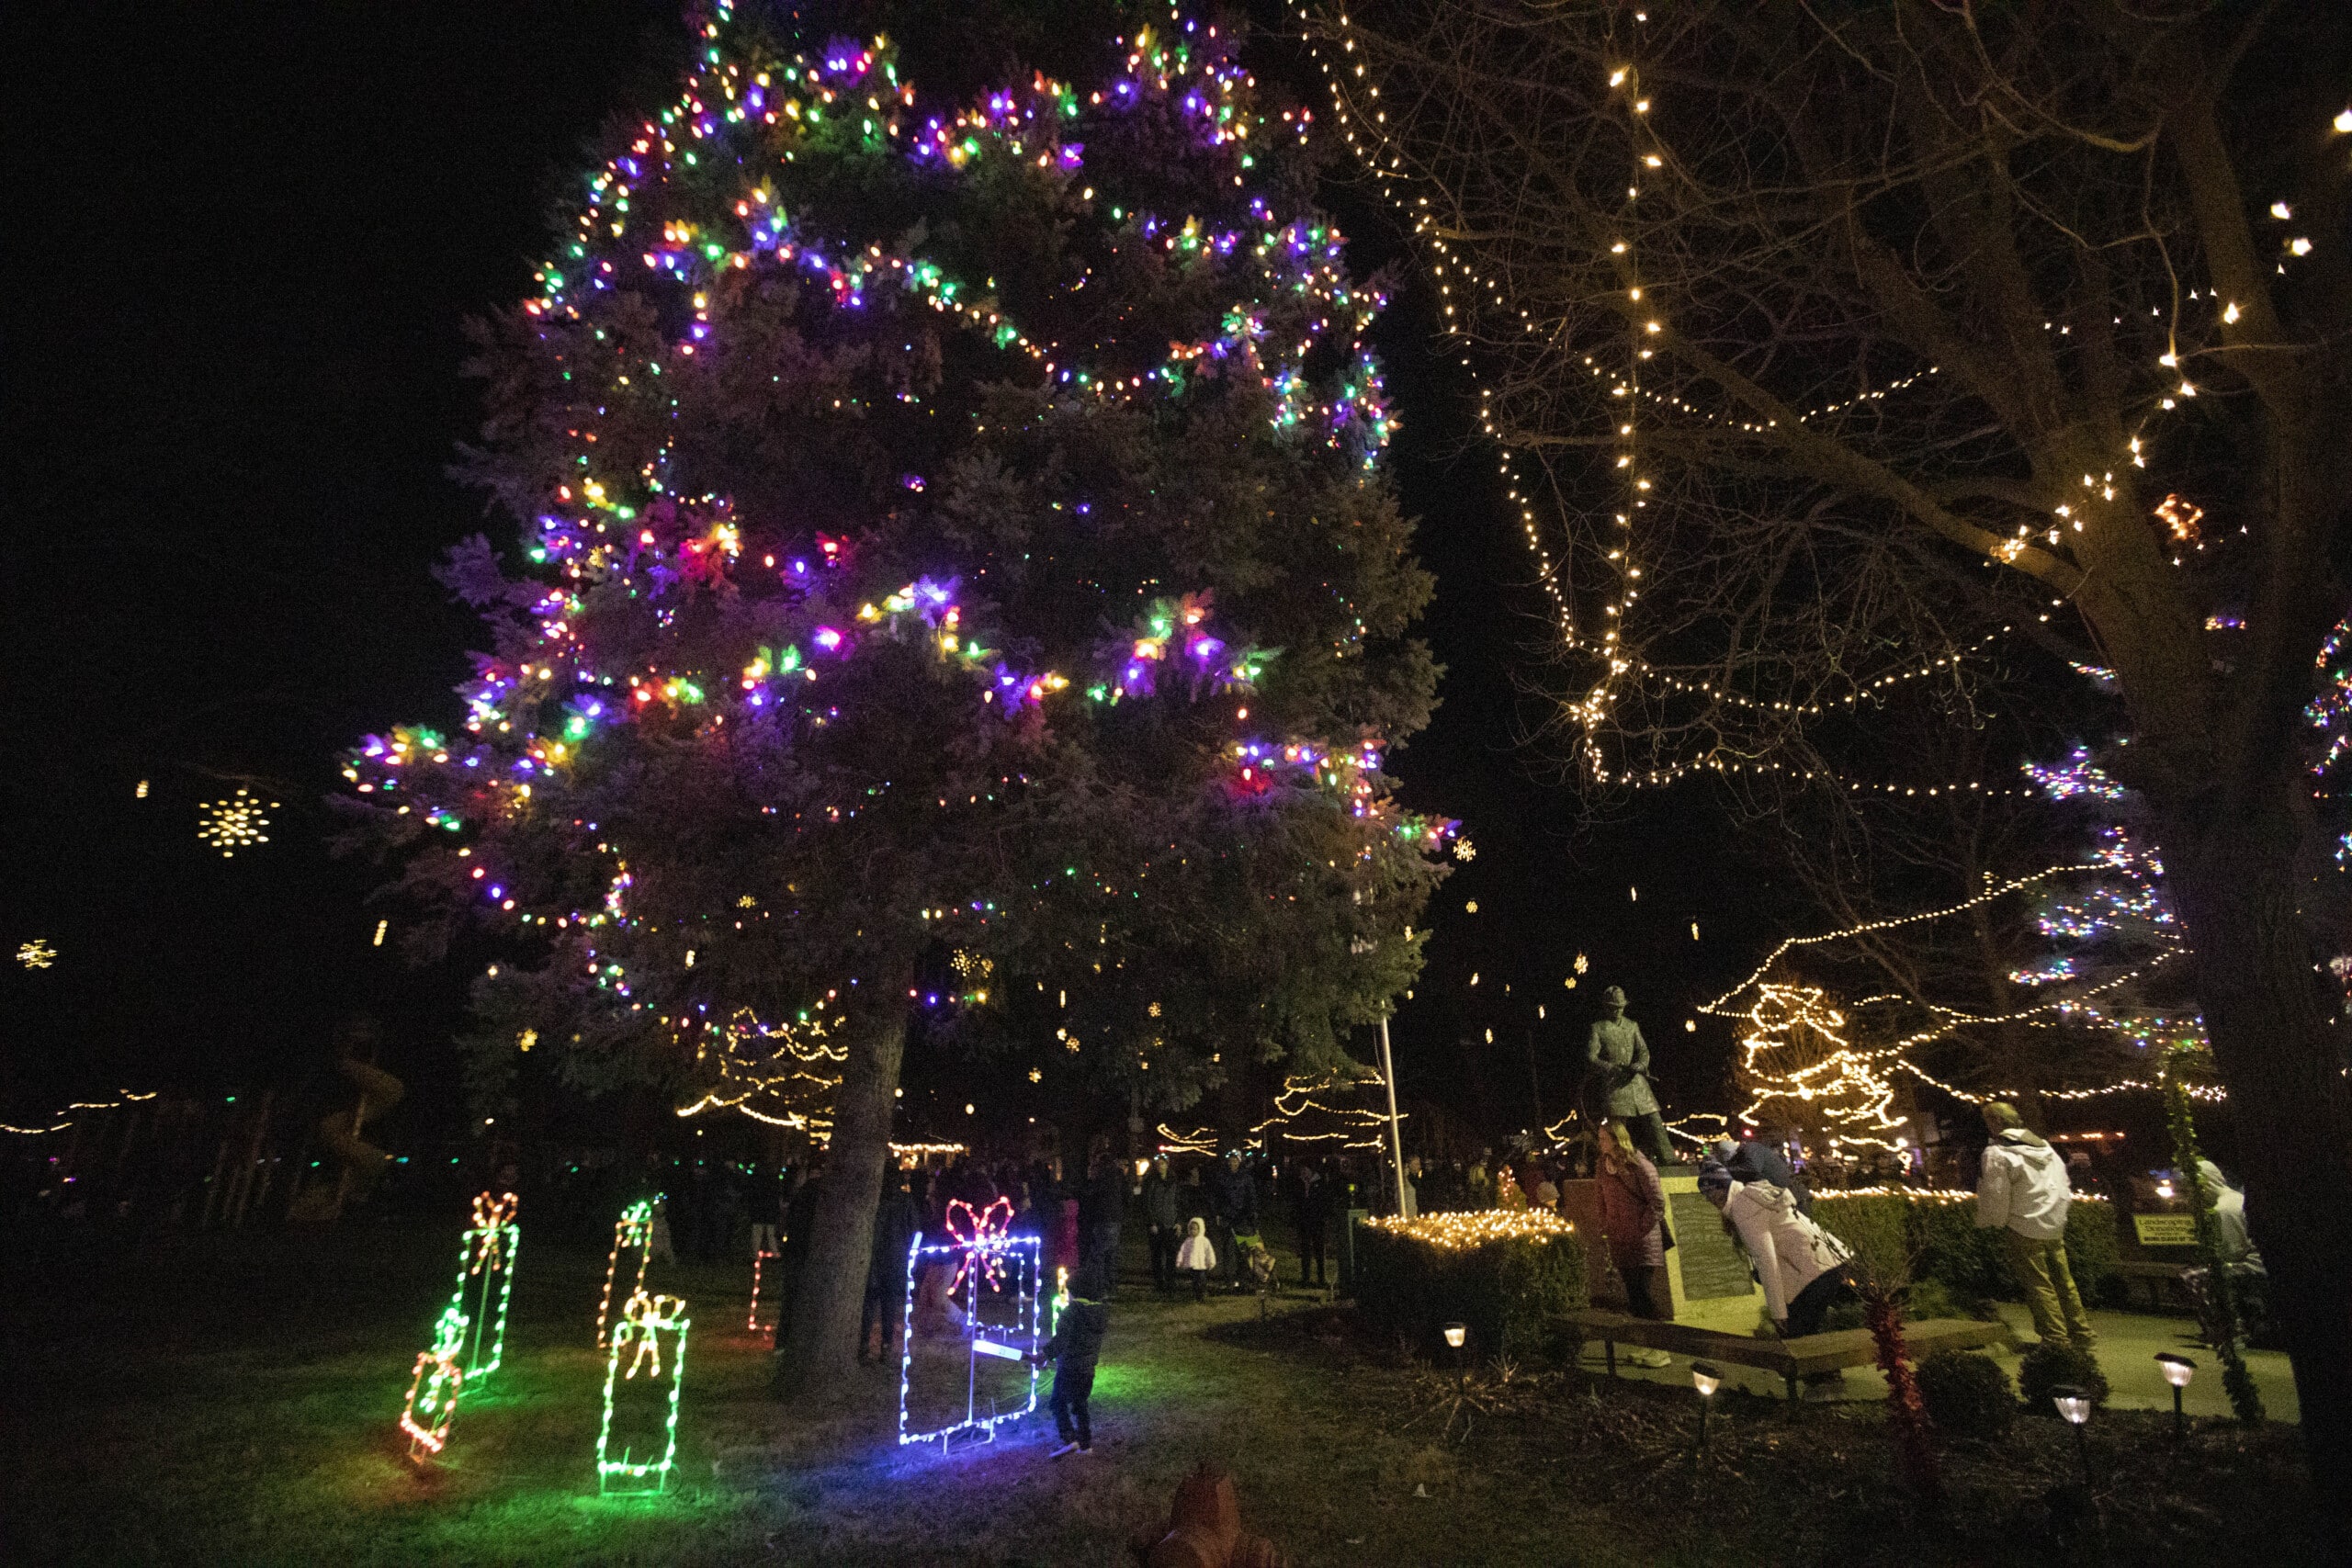 Illuminated Christmas tree and decorations at night.